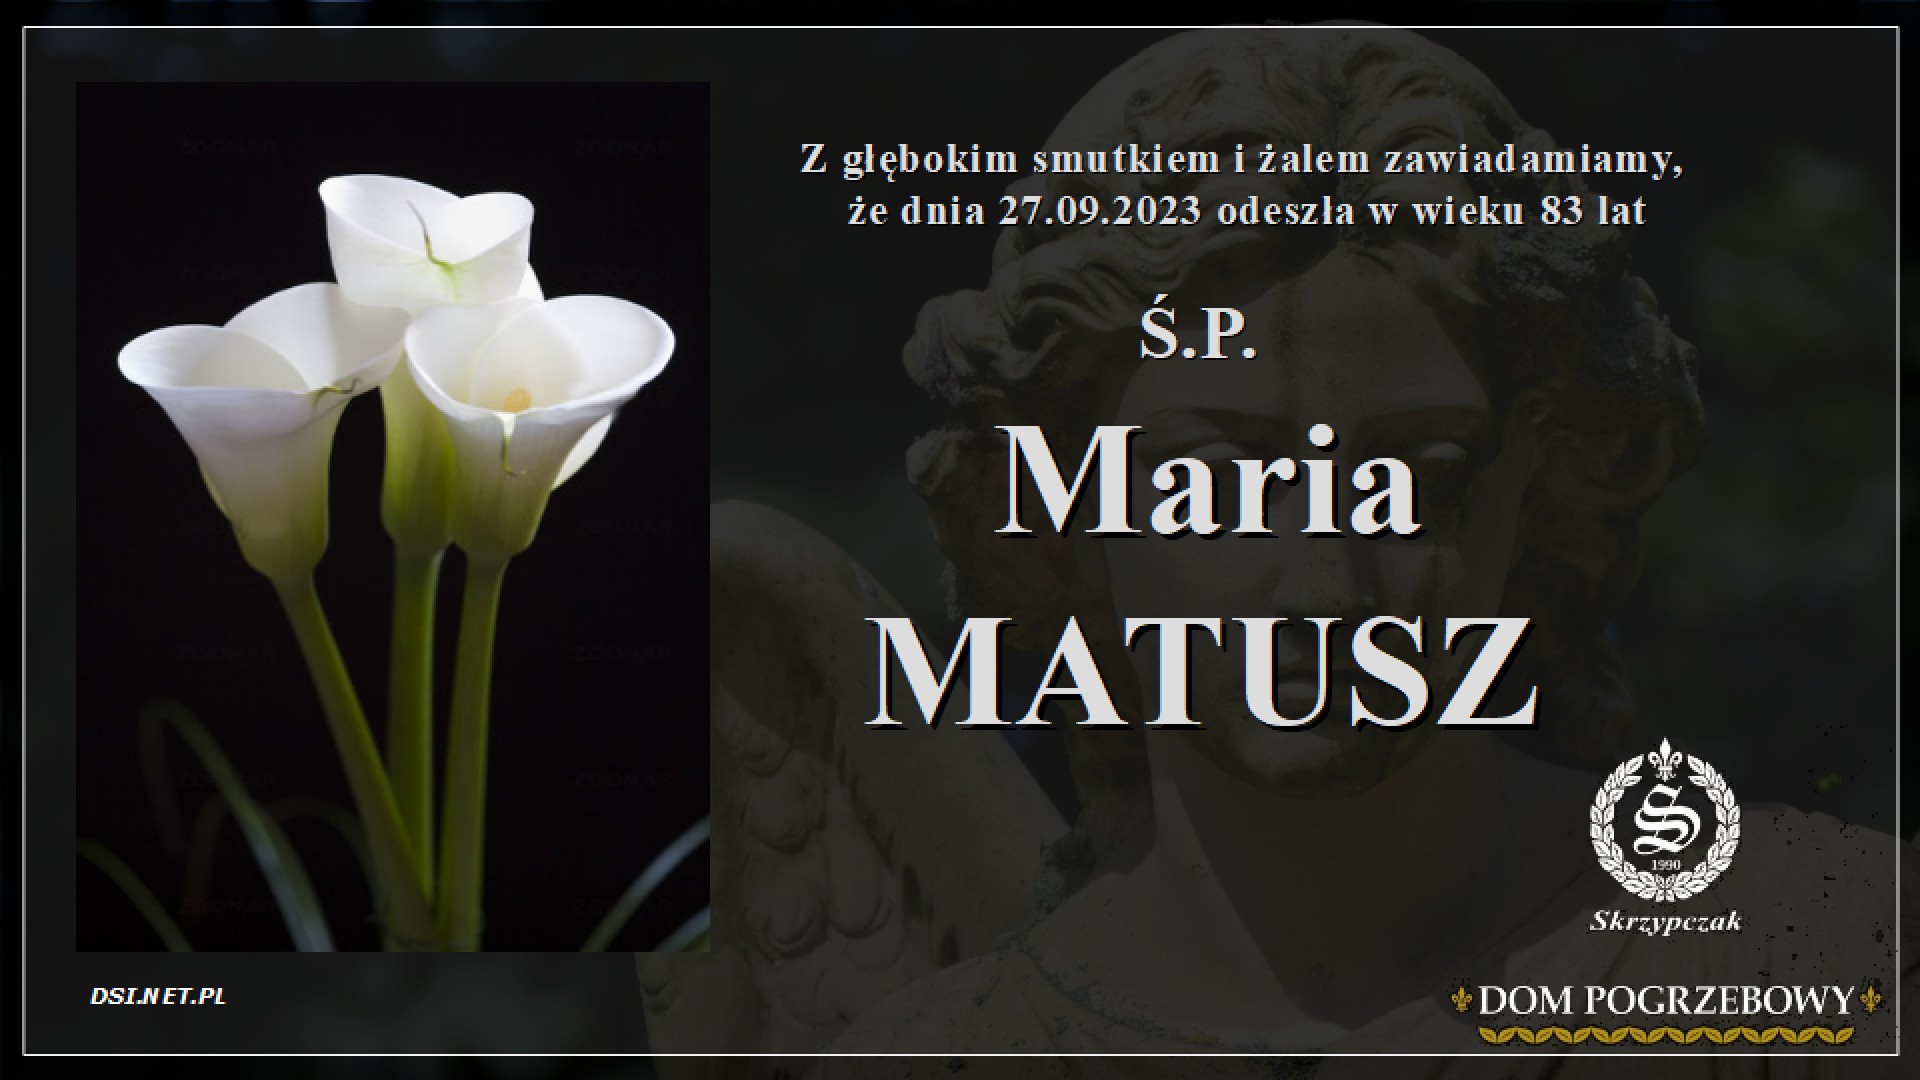 Ś.P. Maria Matusz